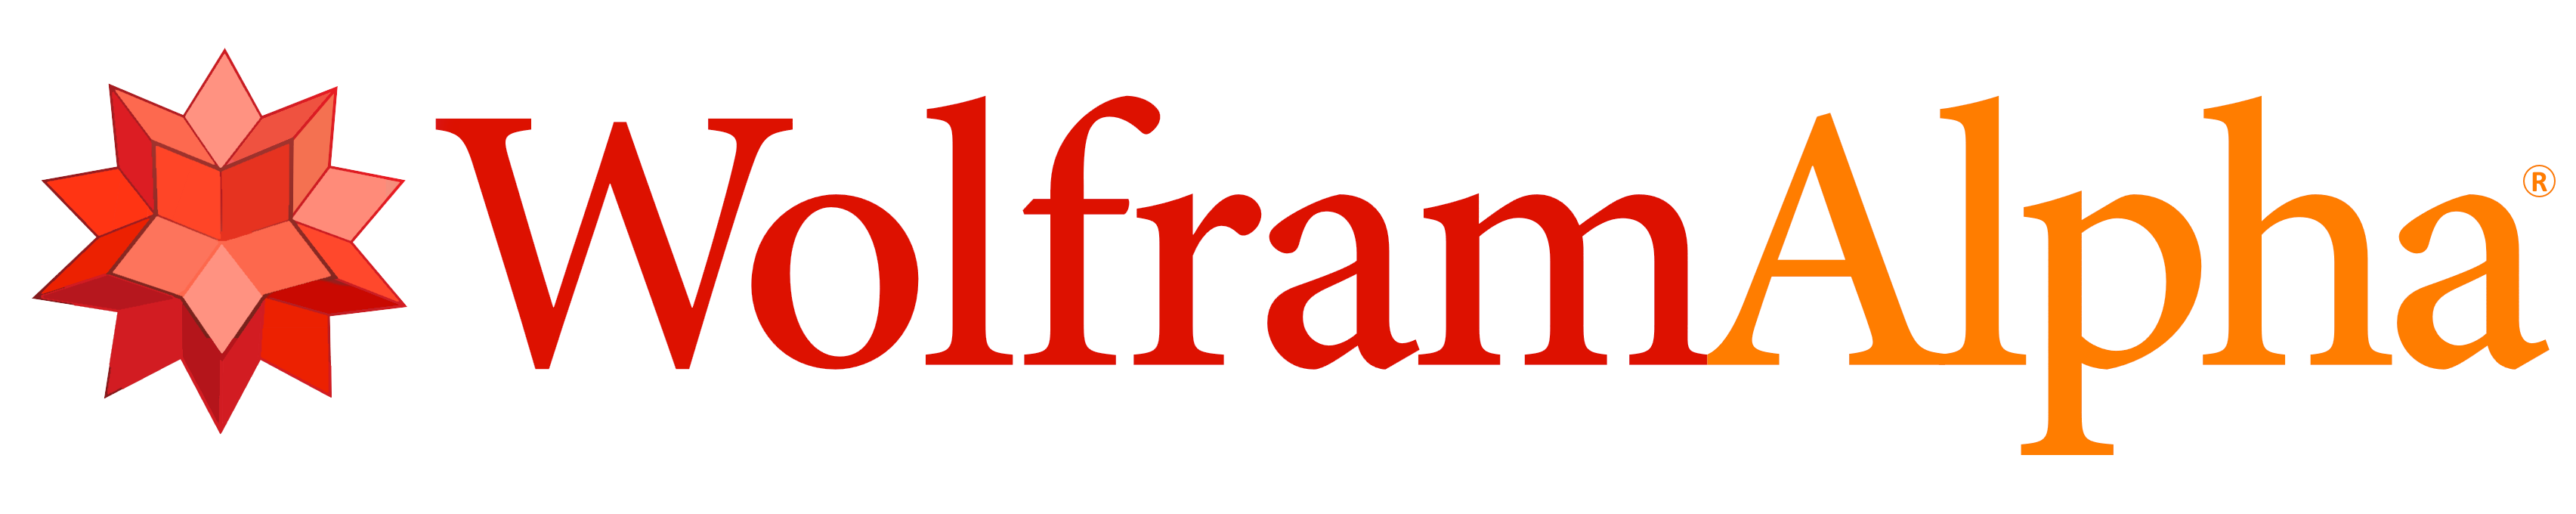 Wolfram Alpha logo/link